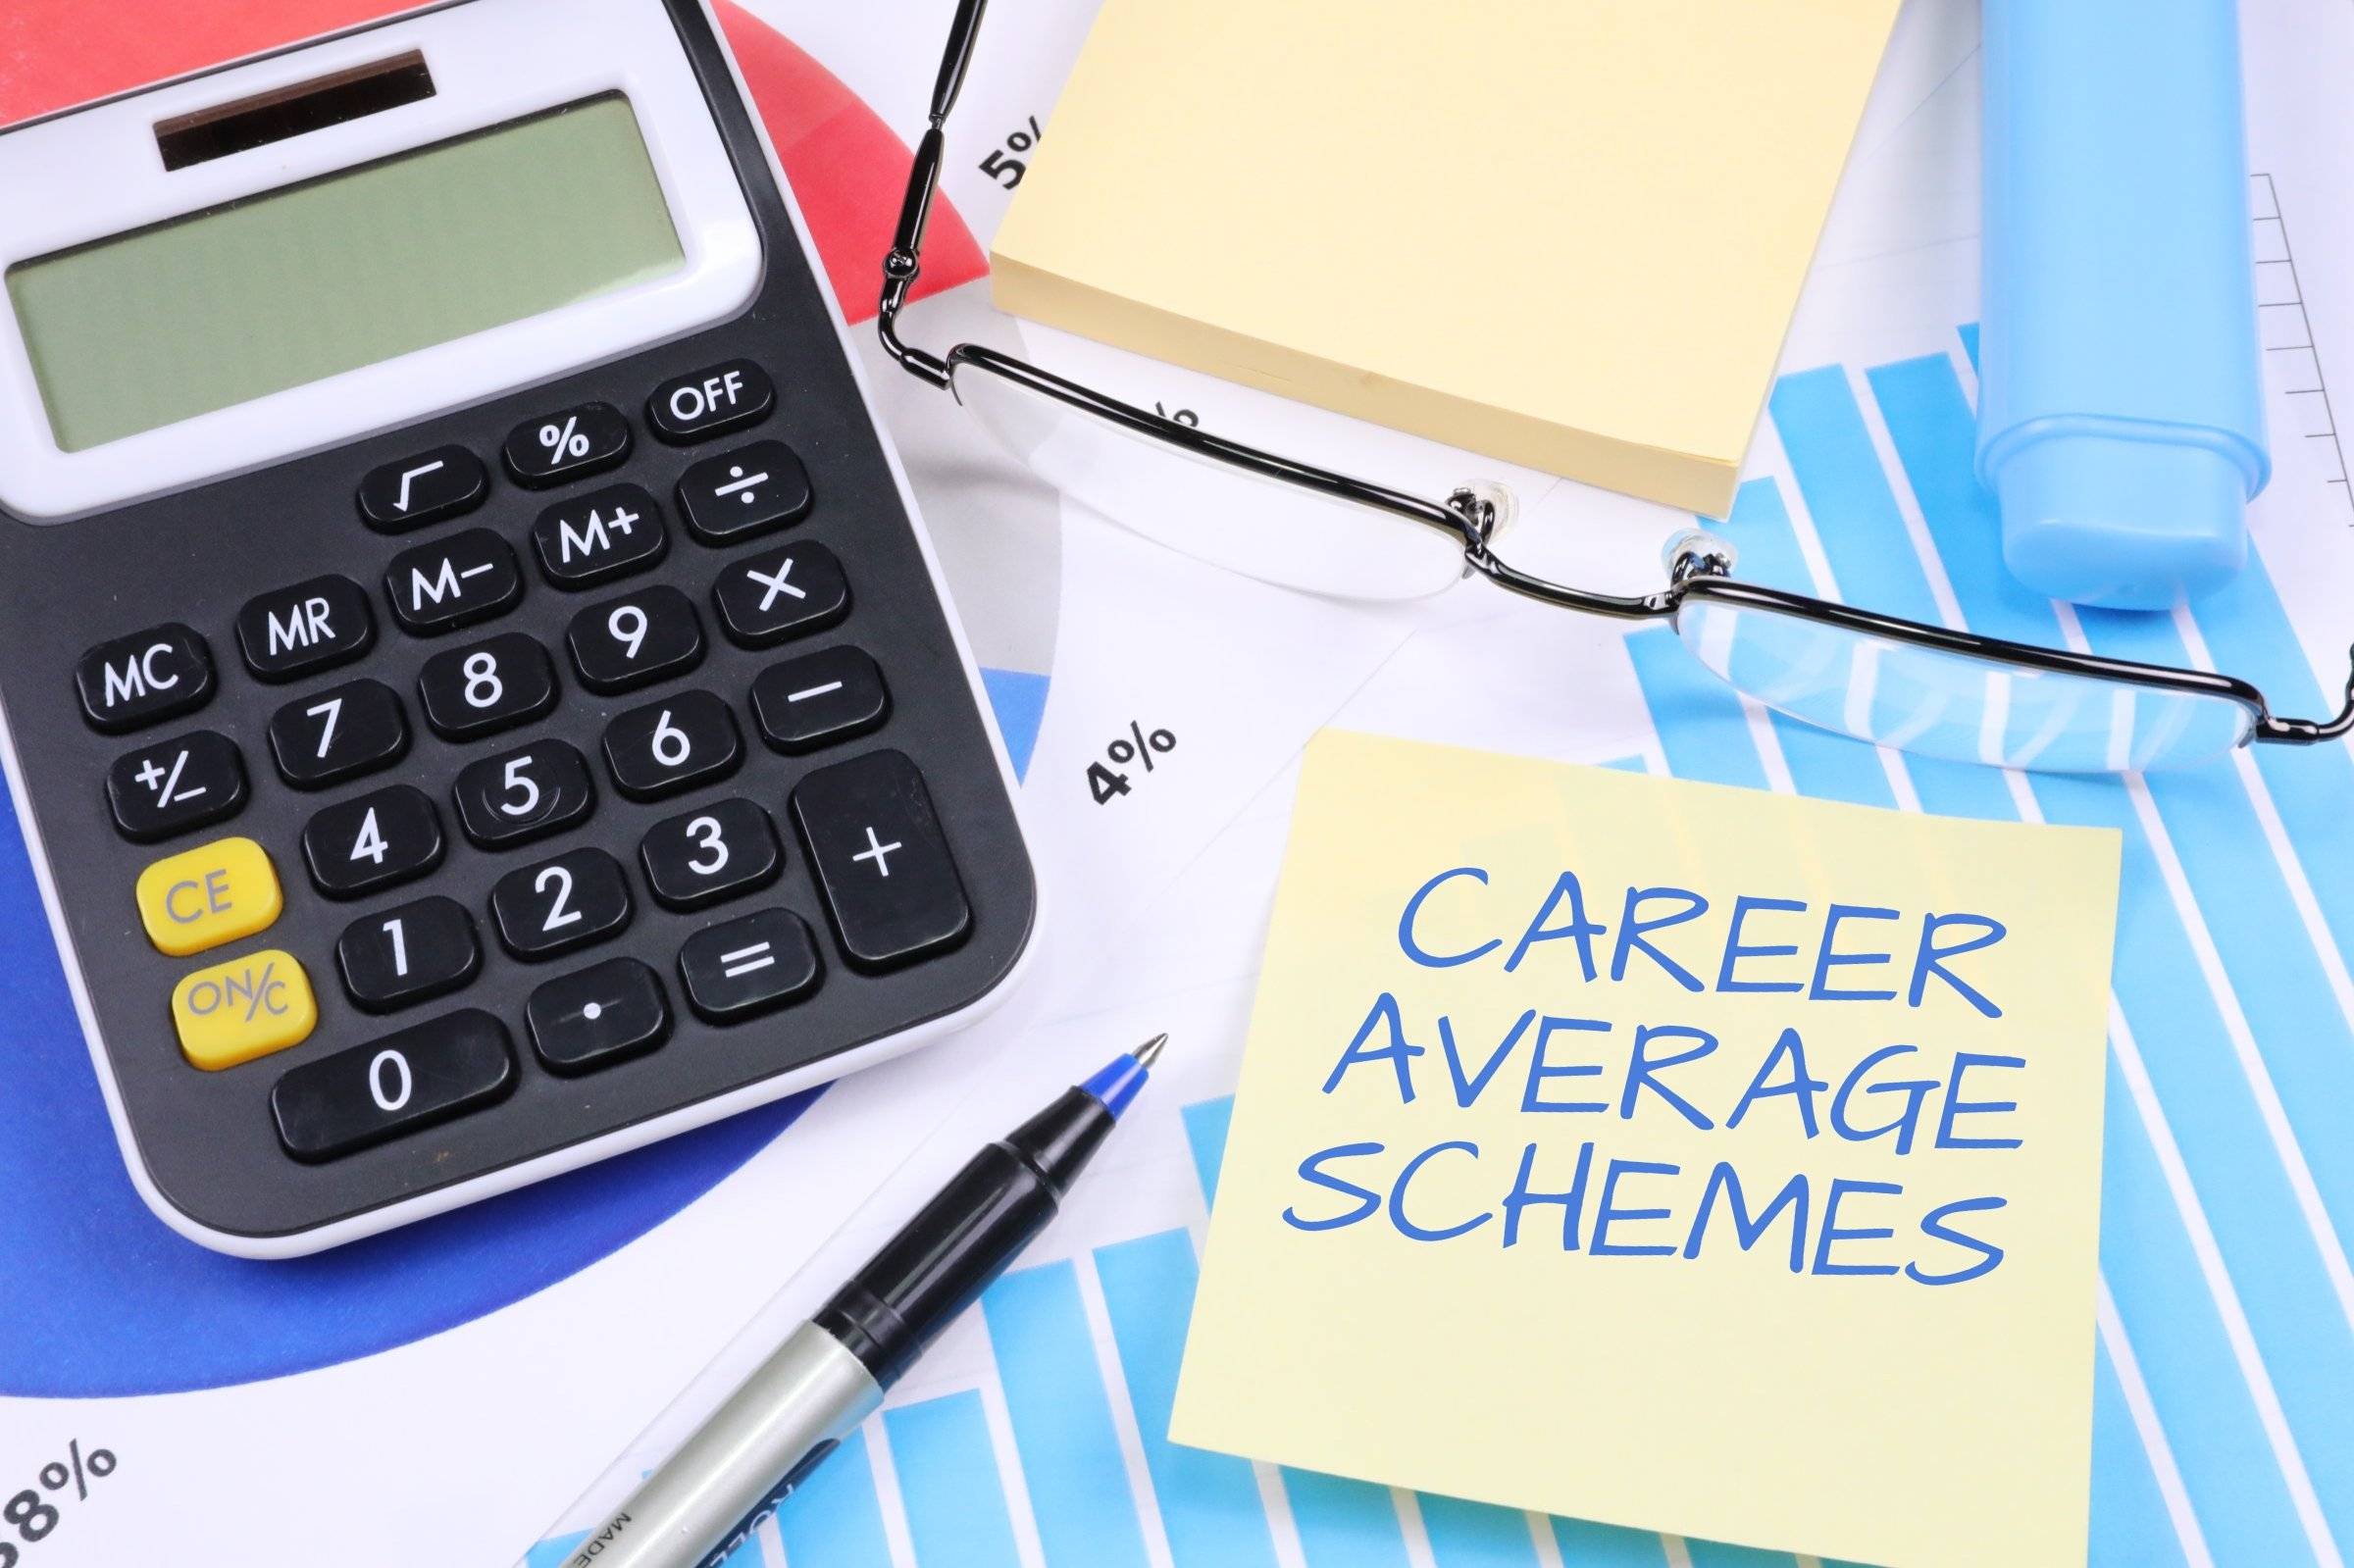 Career Average Schemes